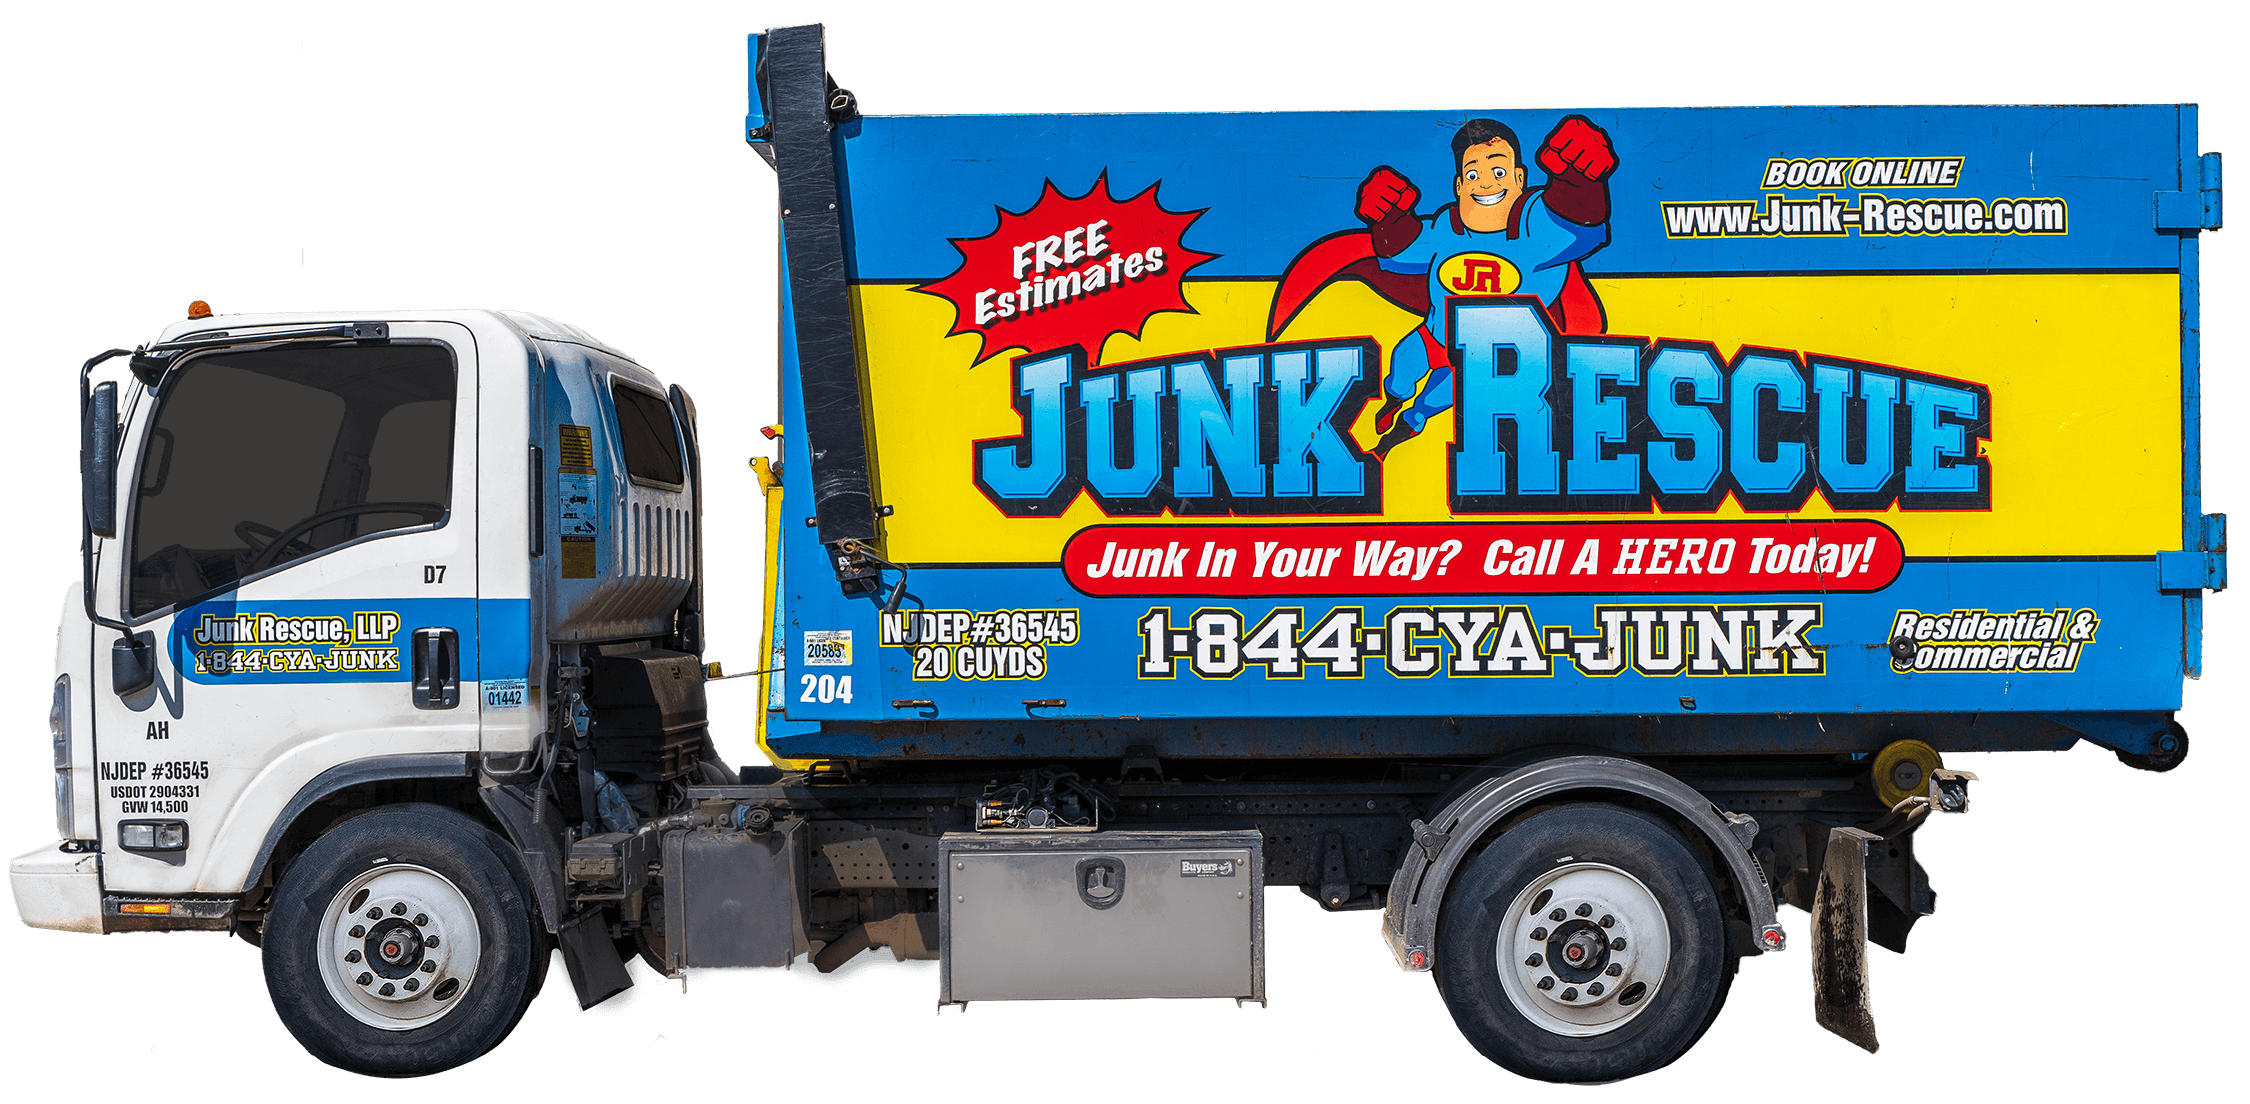 Junk-Rescue